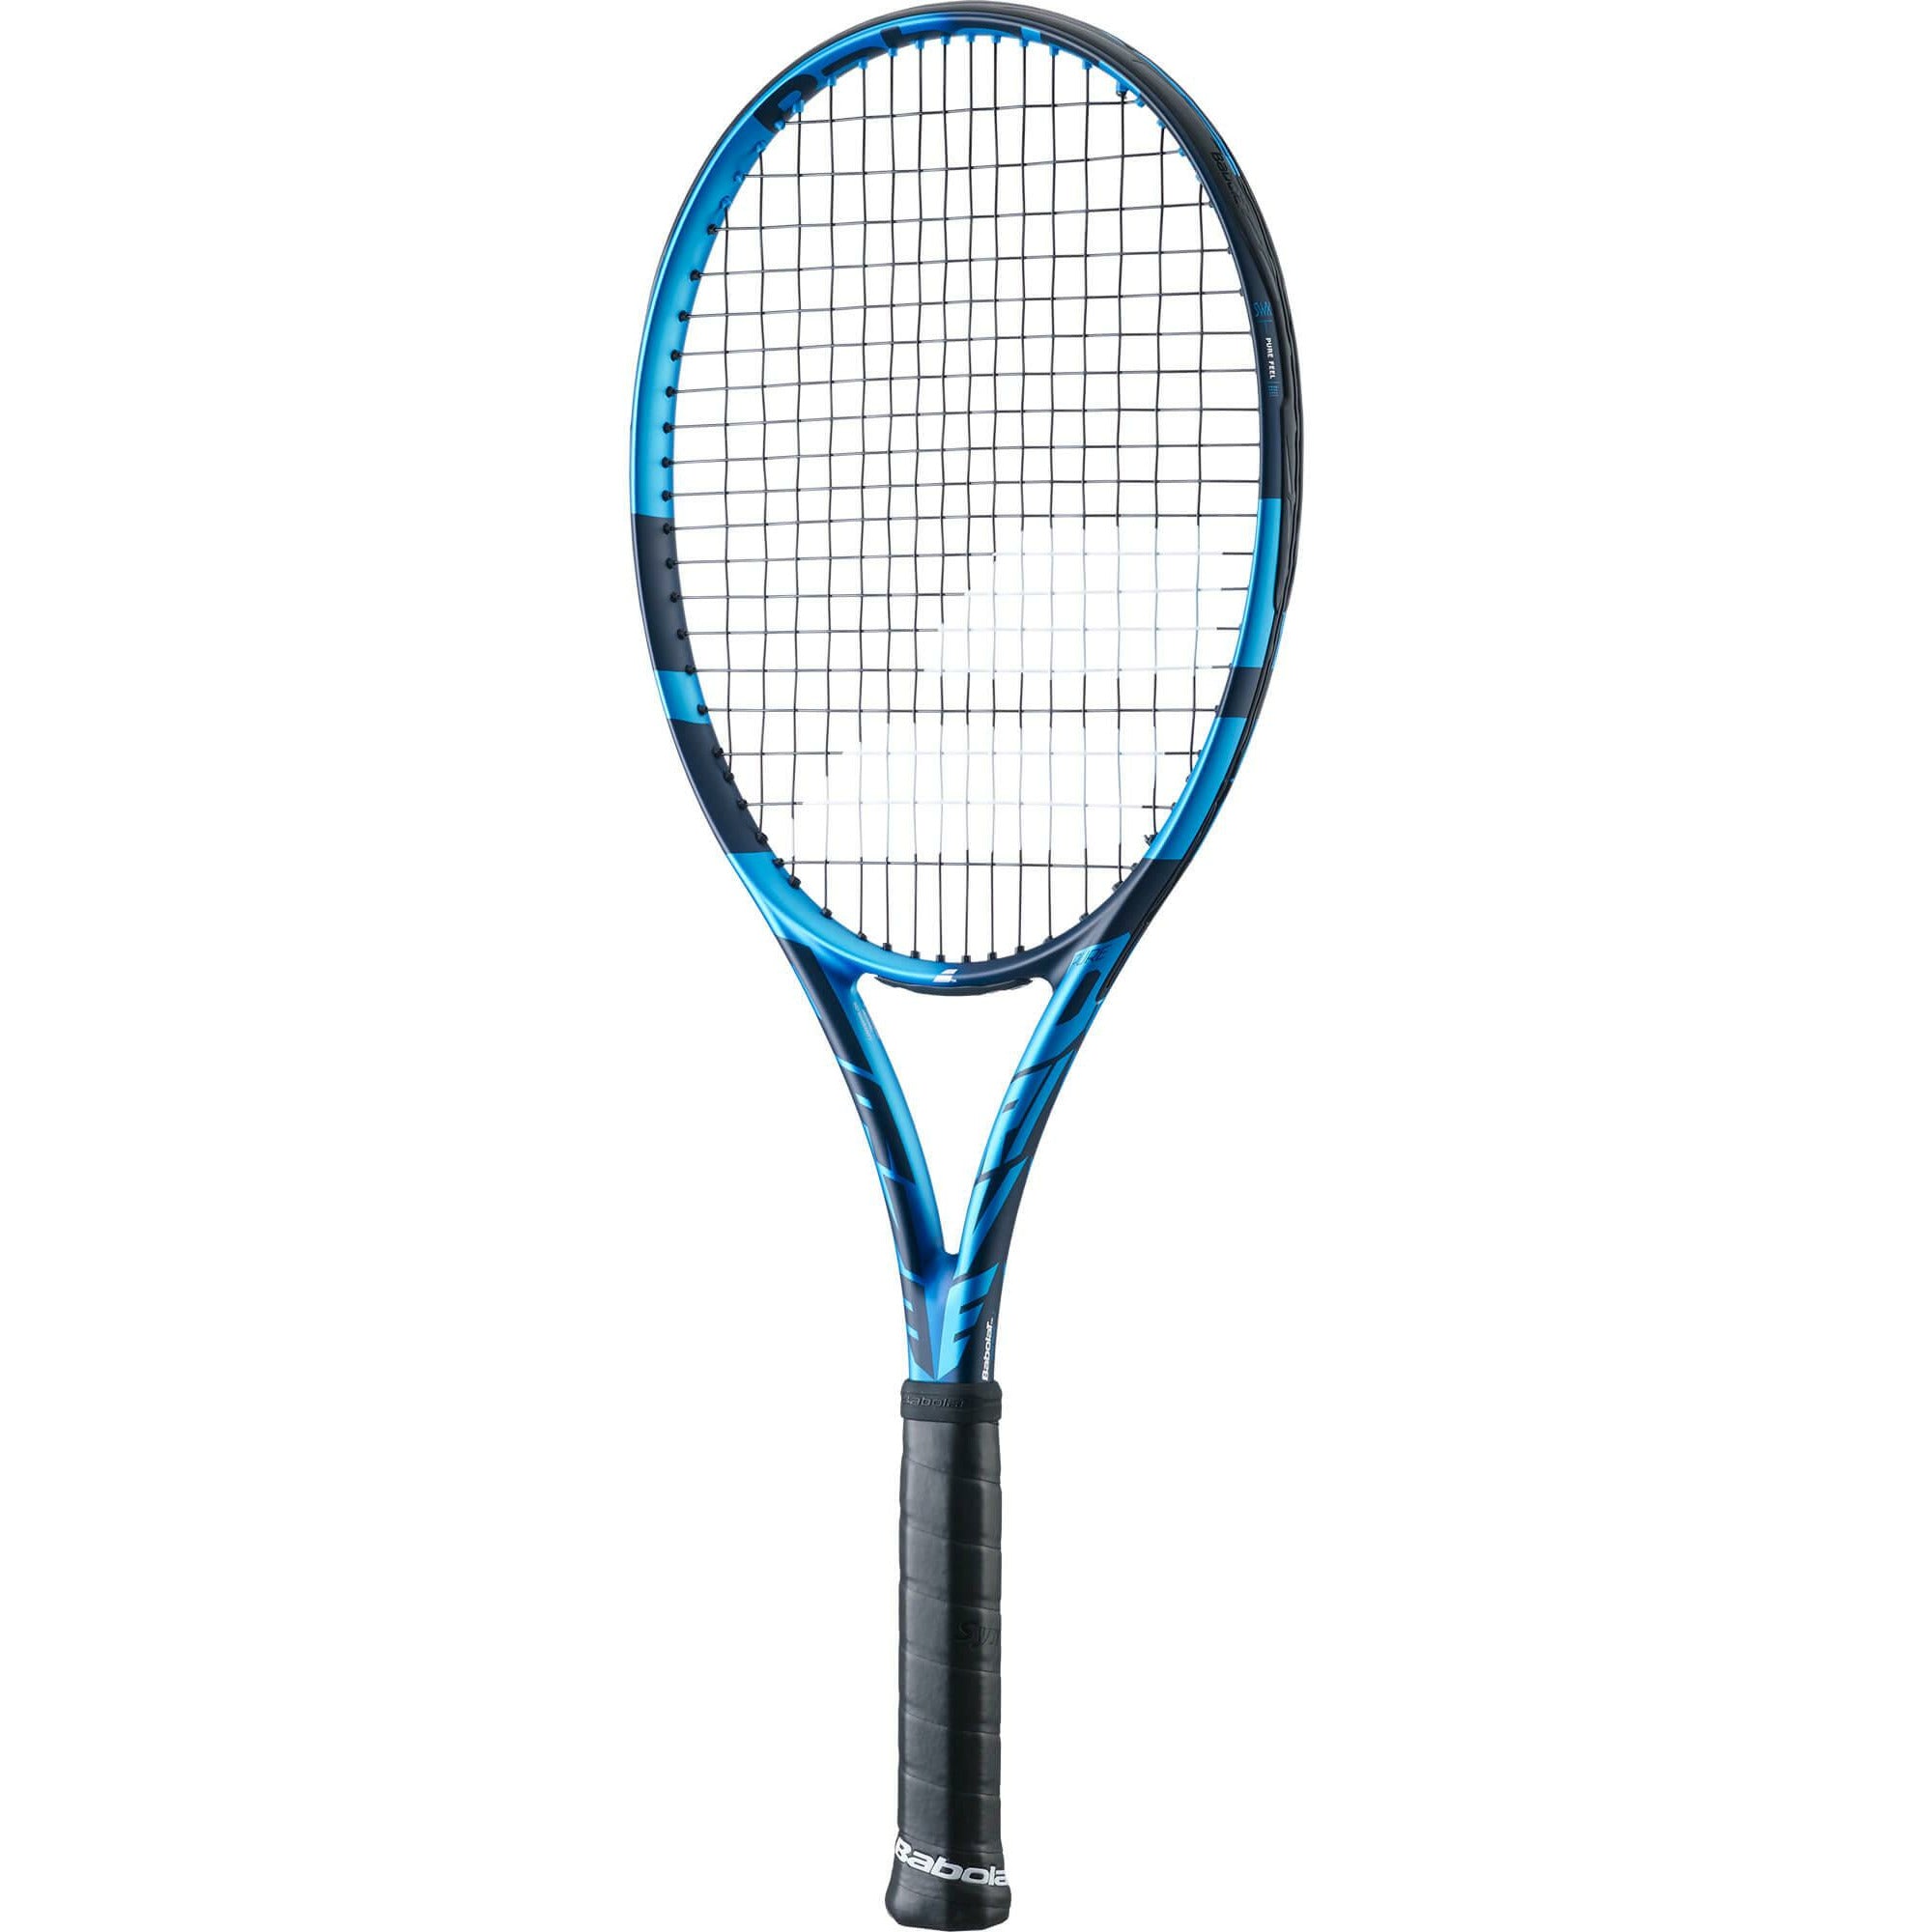 Buy Yonex Tennis Rackets Online - Smash Racket Pro